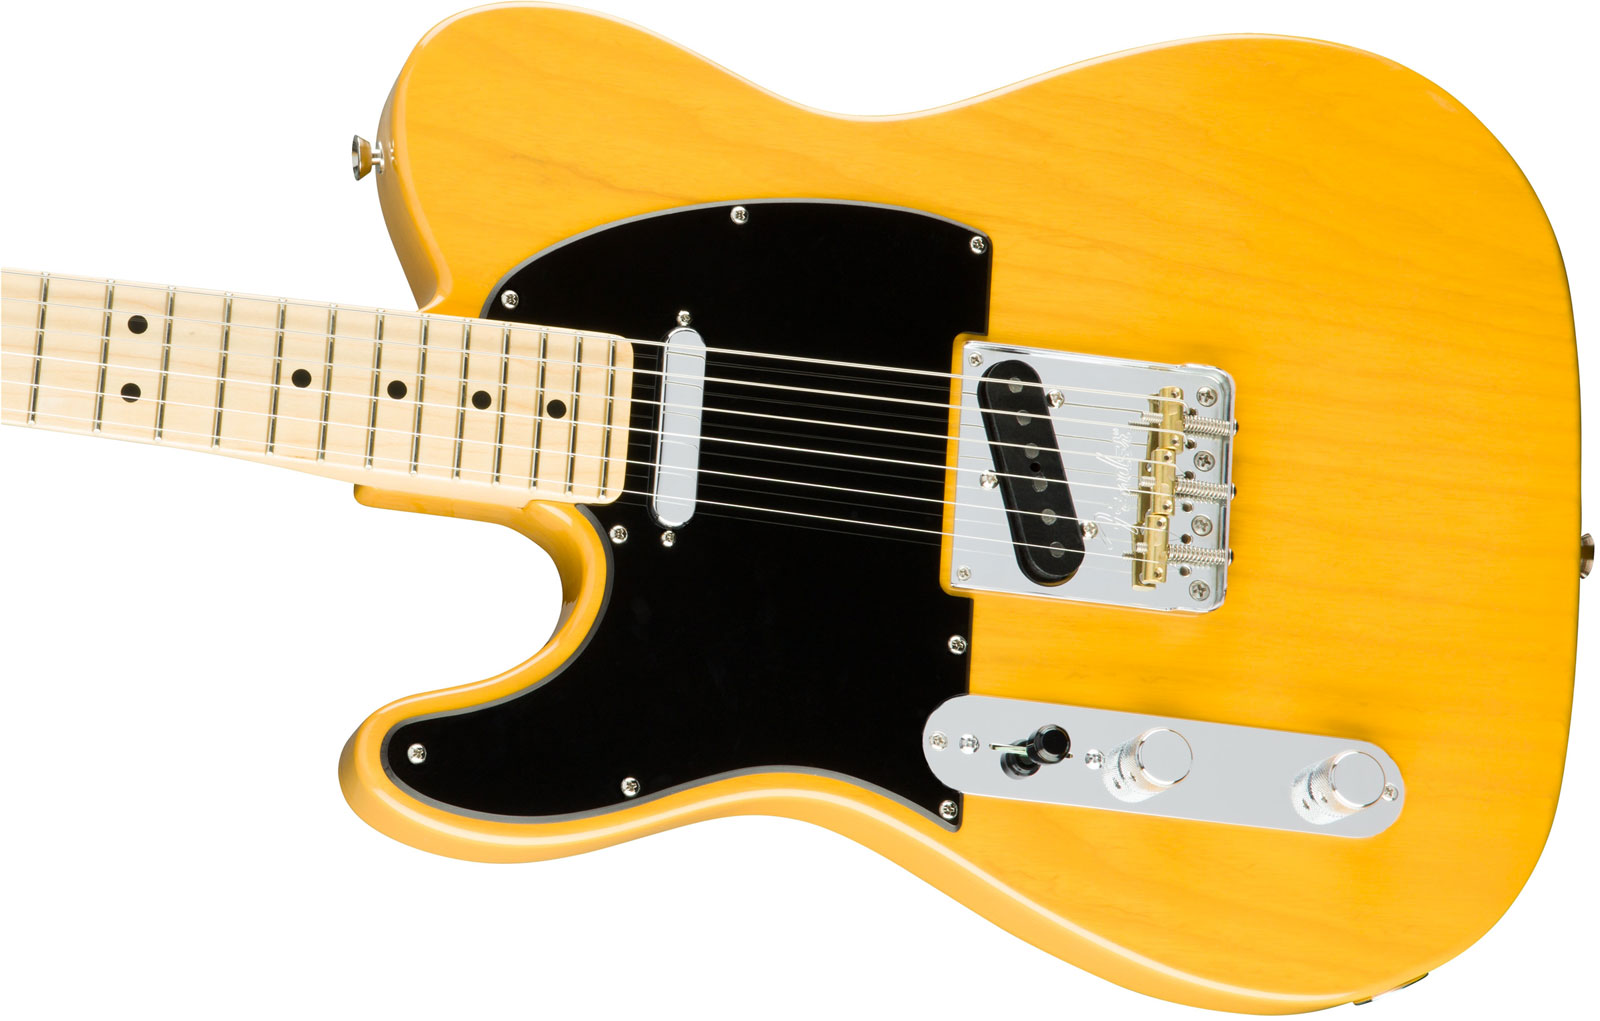 Fender Tele American Professional Lh Usa Gaucher 2s Mn - Butterscotch Blonde - Left-handed electric guitar - Variation 3